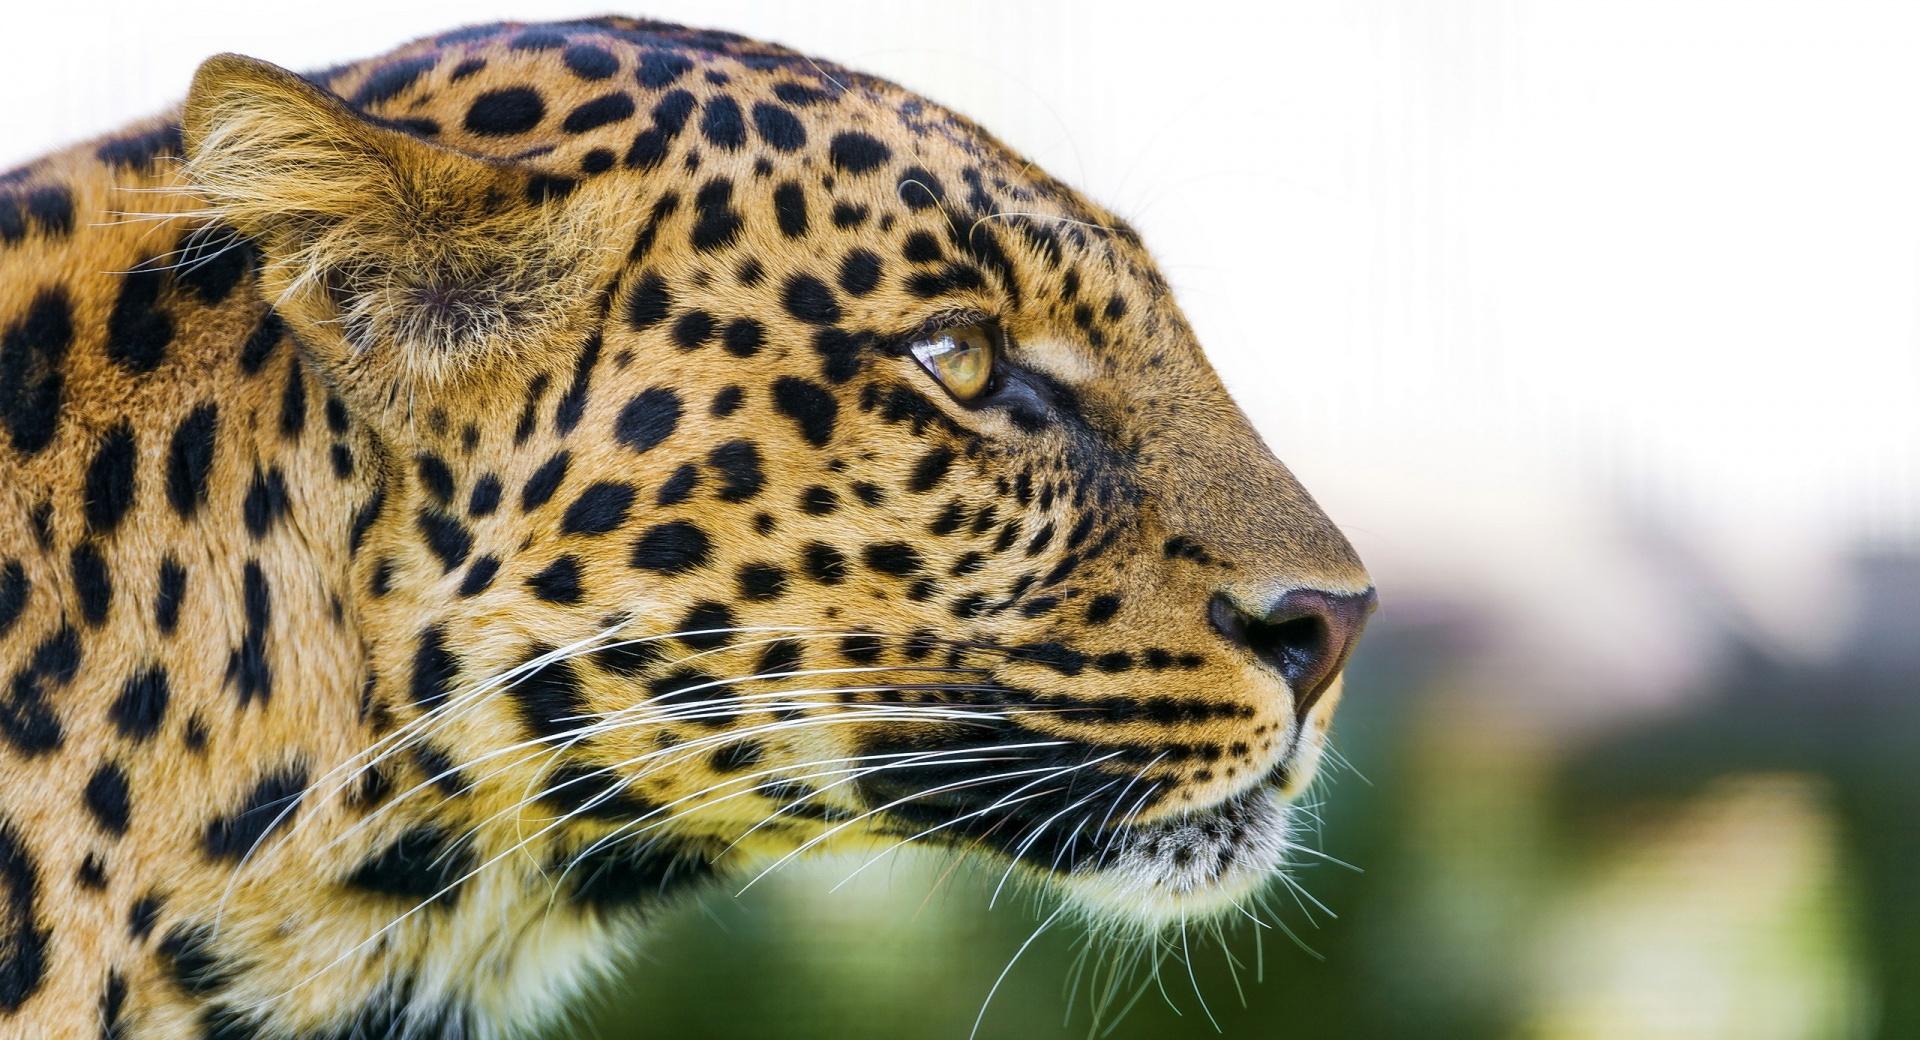 Big Cat Leopard Portrait Side View at 2048 x 2048 iPad size wallpapers HD quality